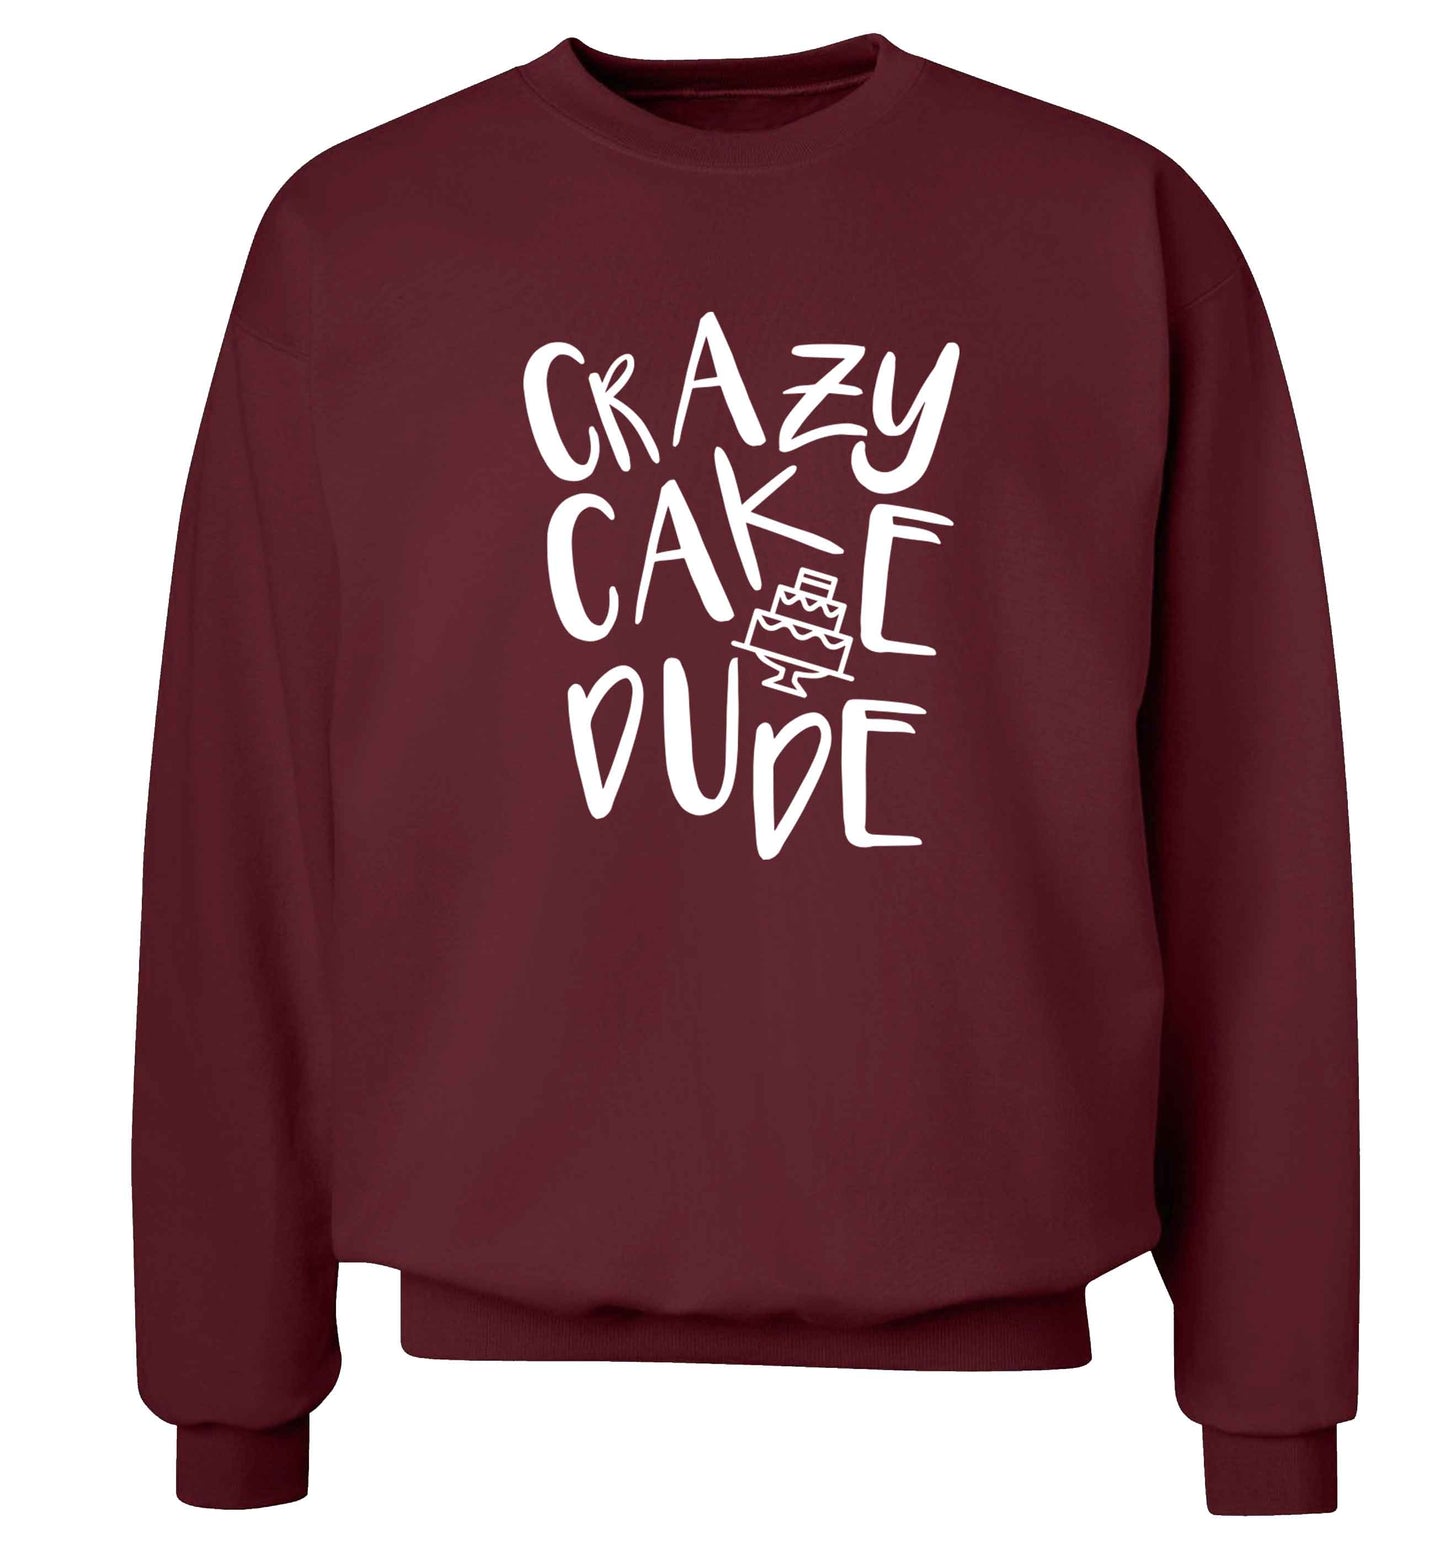 Crazy cake dude Adult's unisex maroon Sweater 2XL